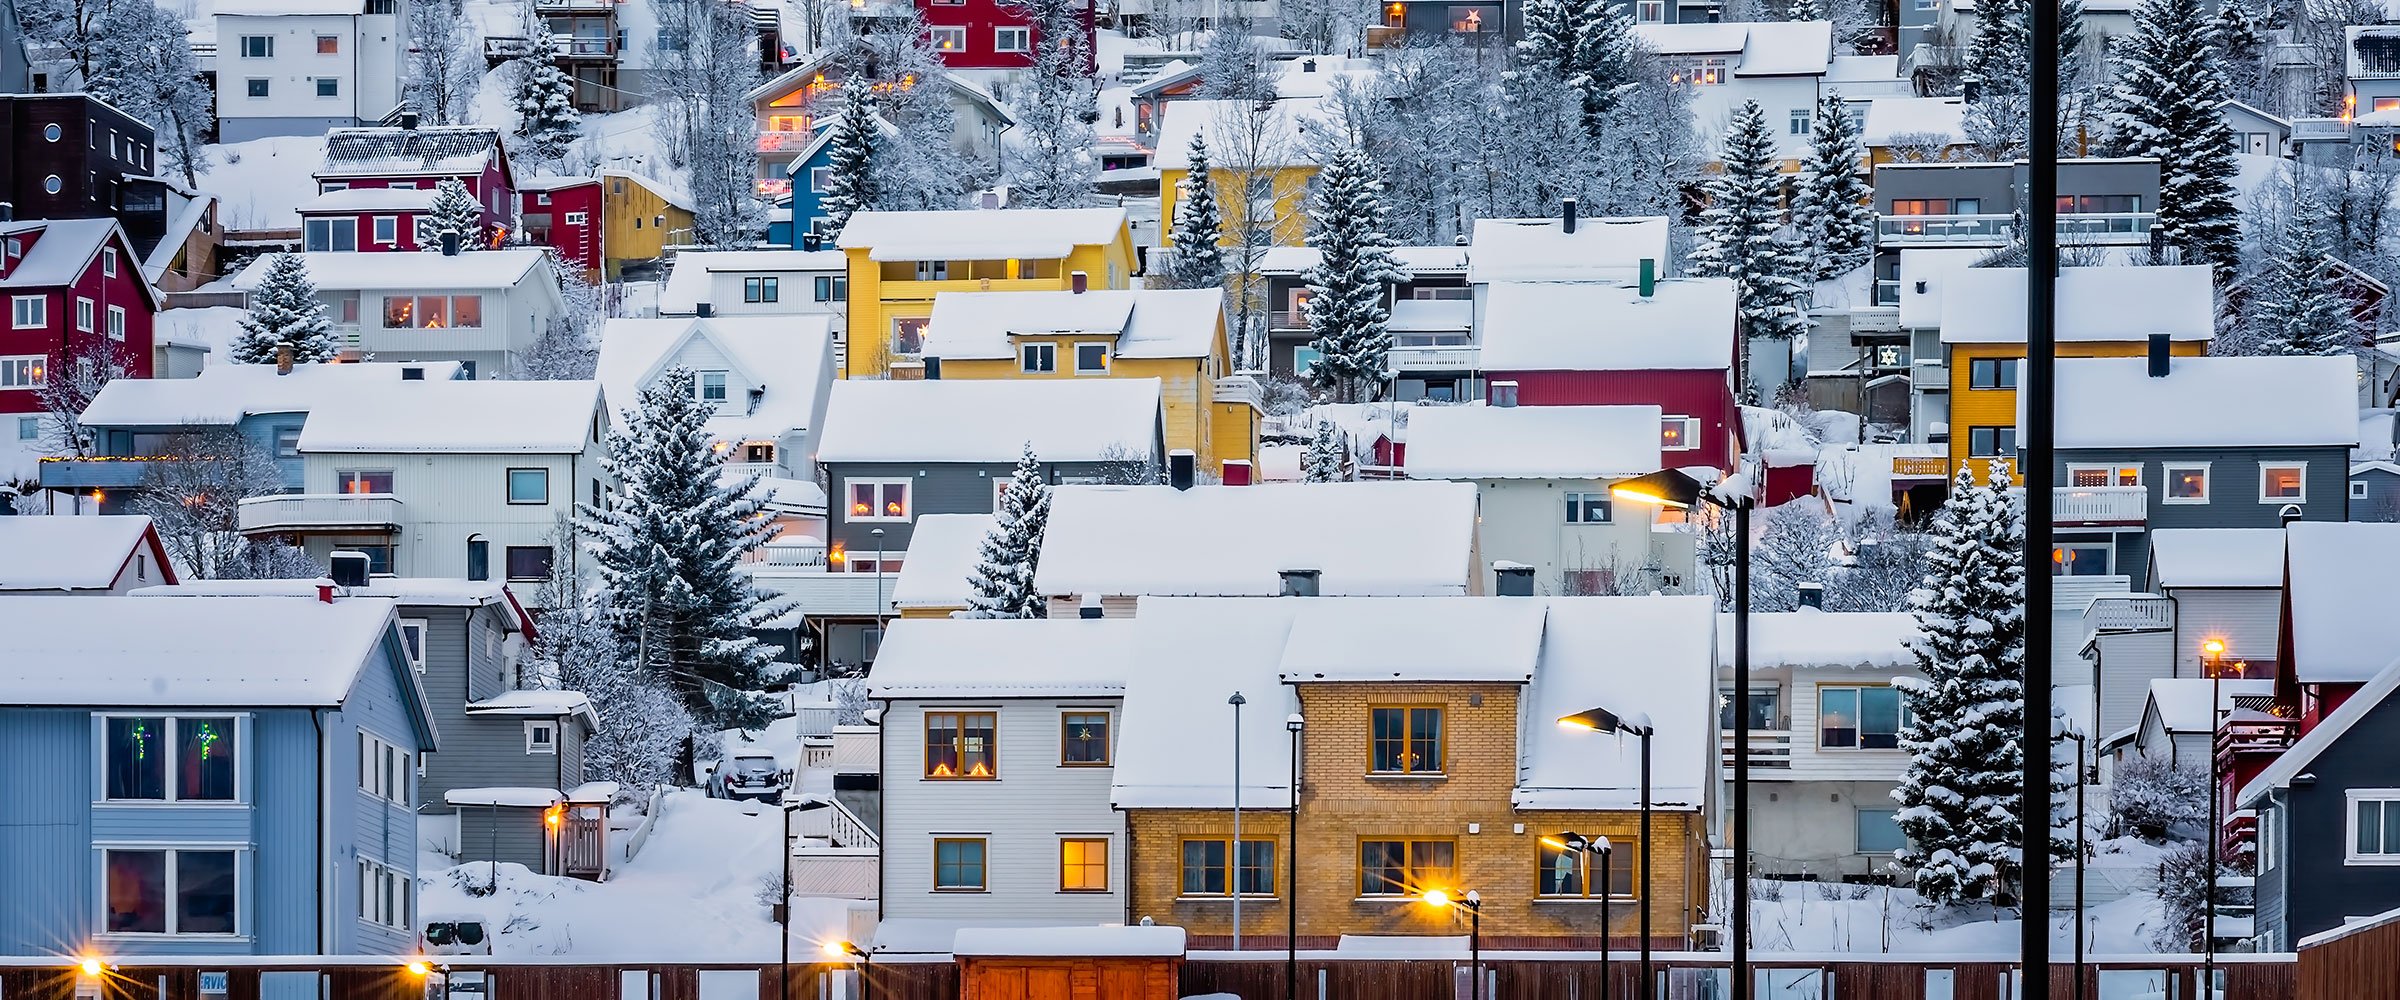 hillside-houses-in-tromso-in-winter-UGLEKVR